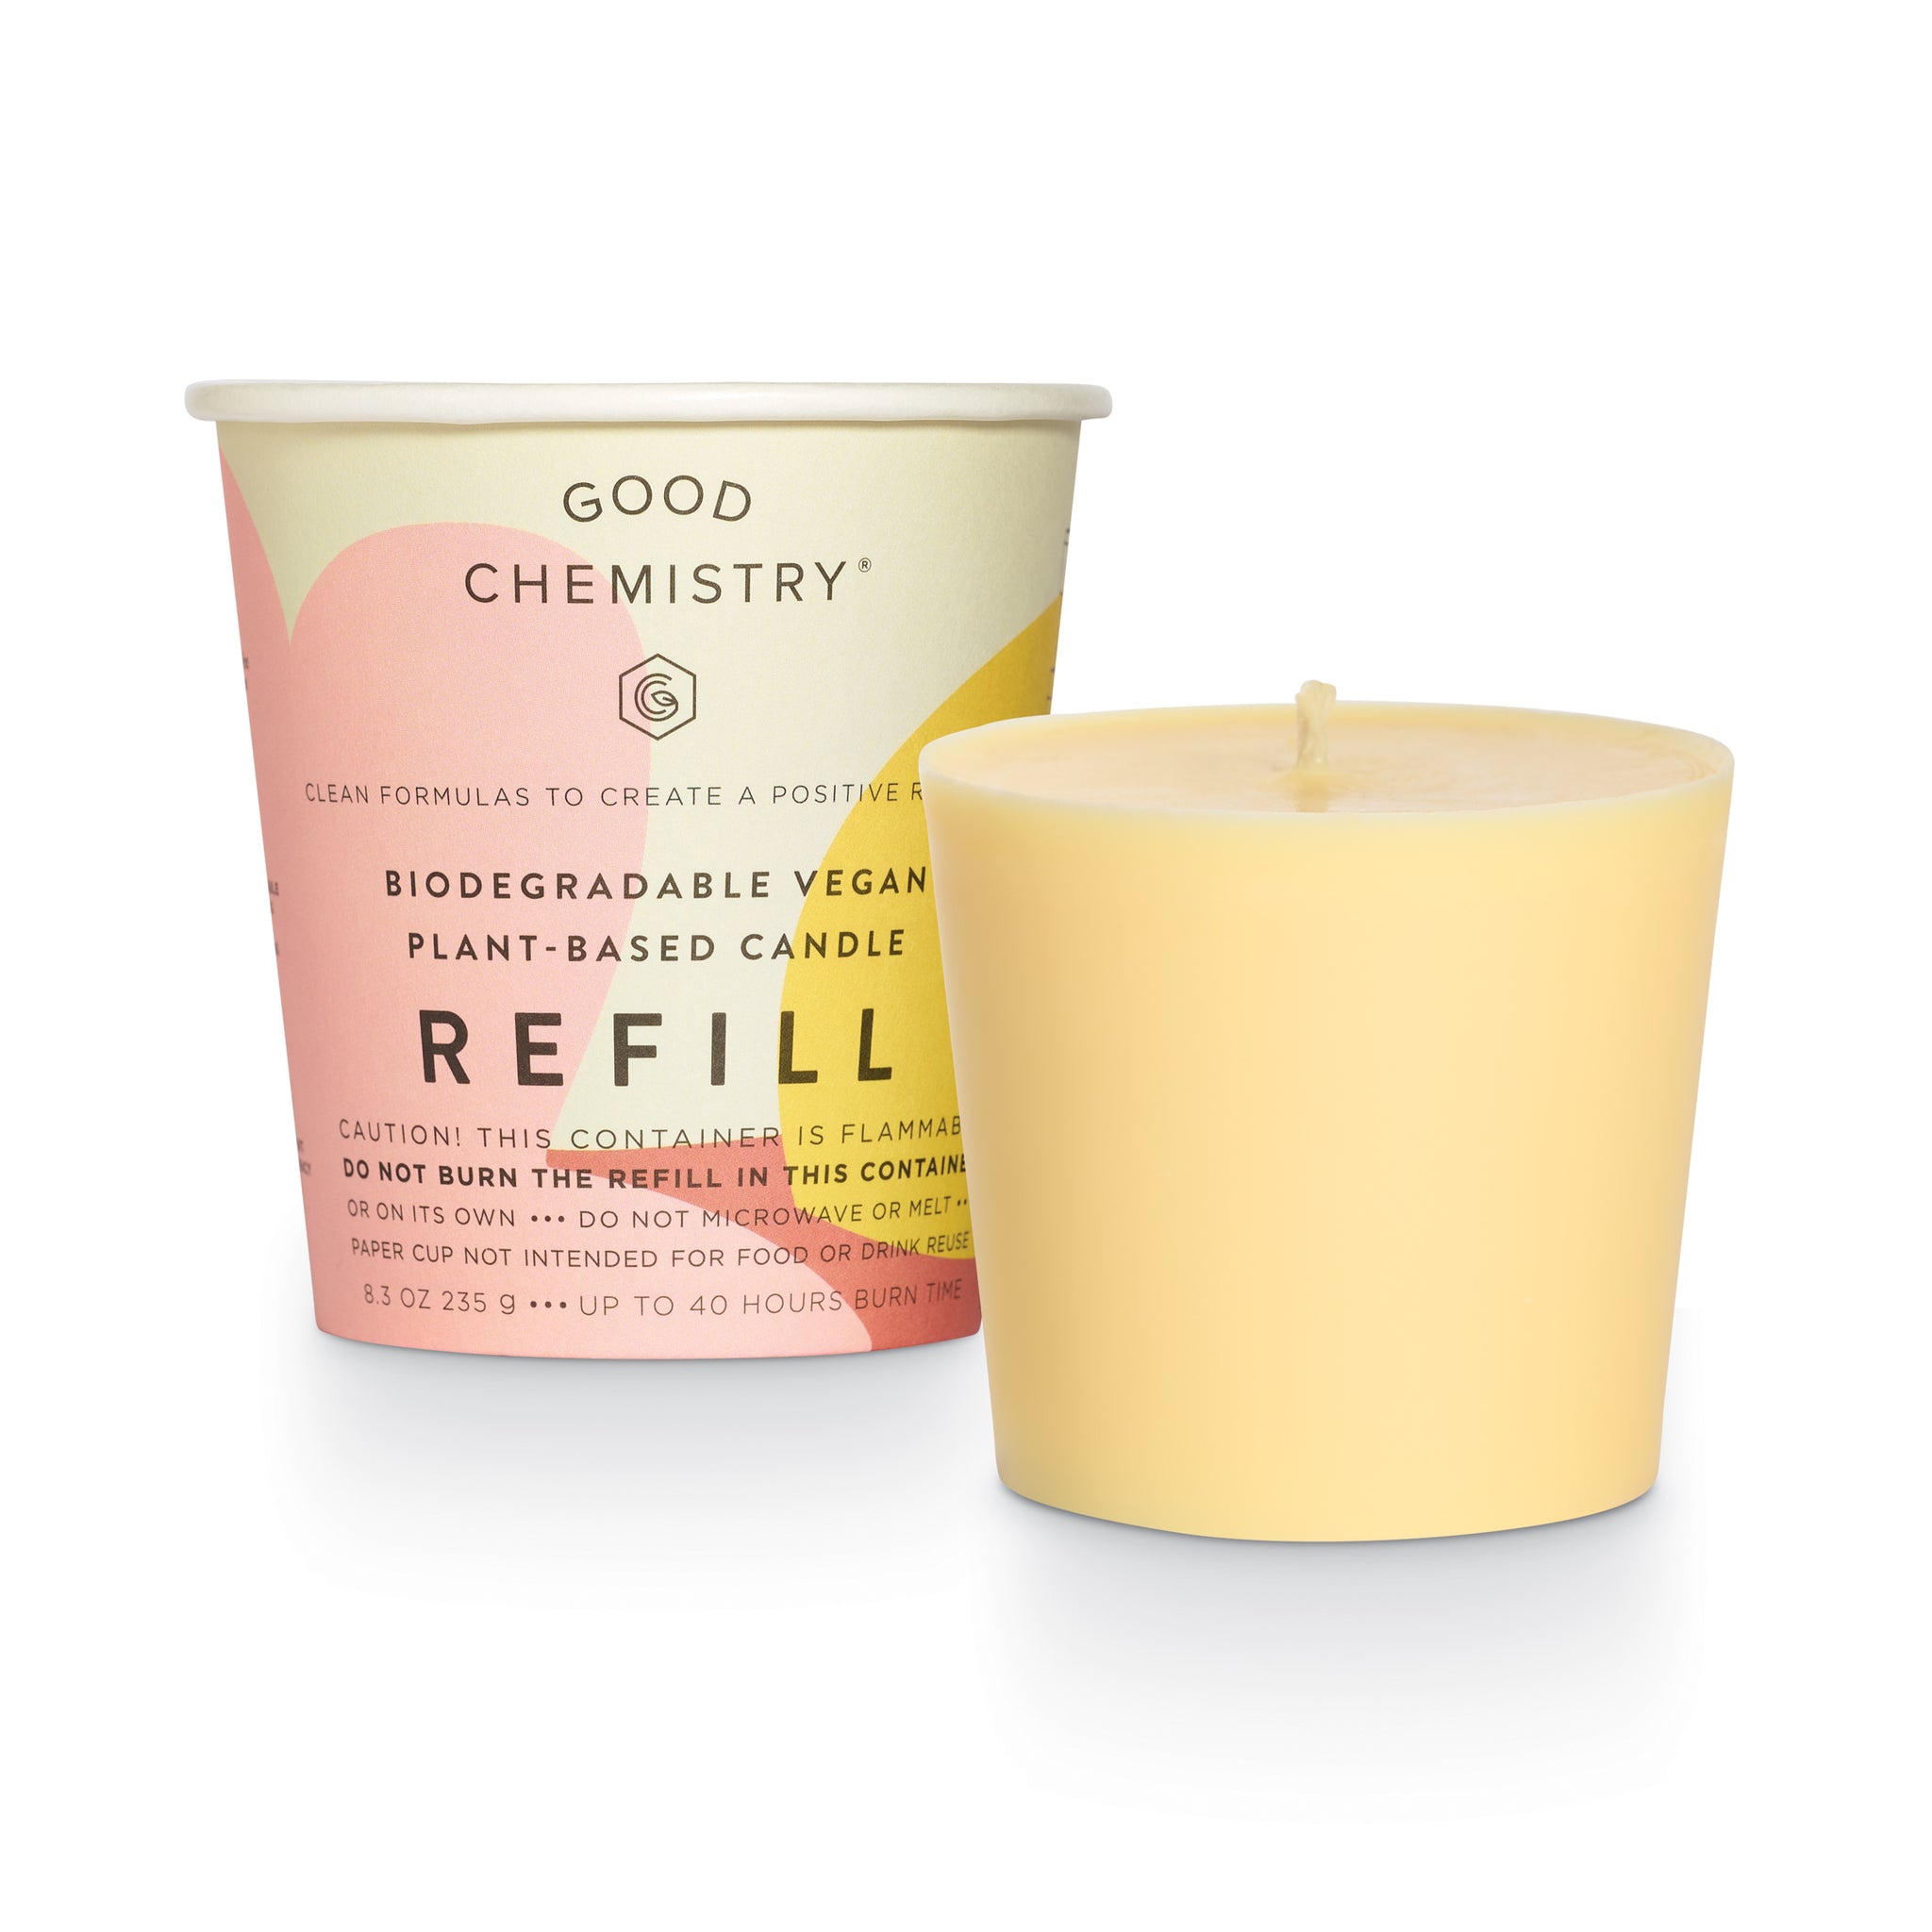 Lemon + Love Biodegradable Candle Refill